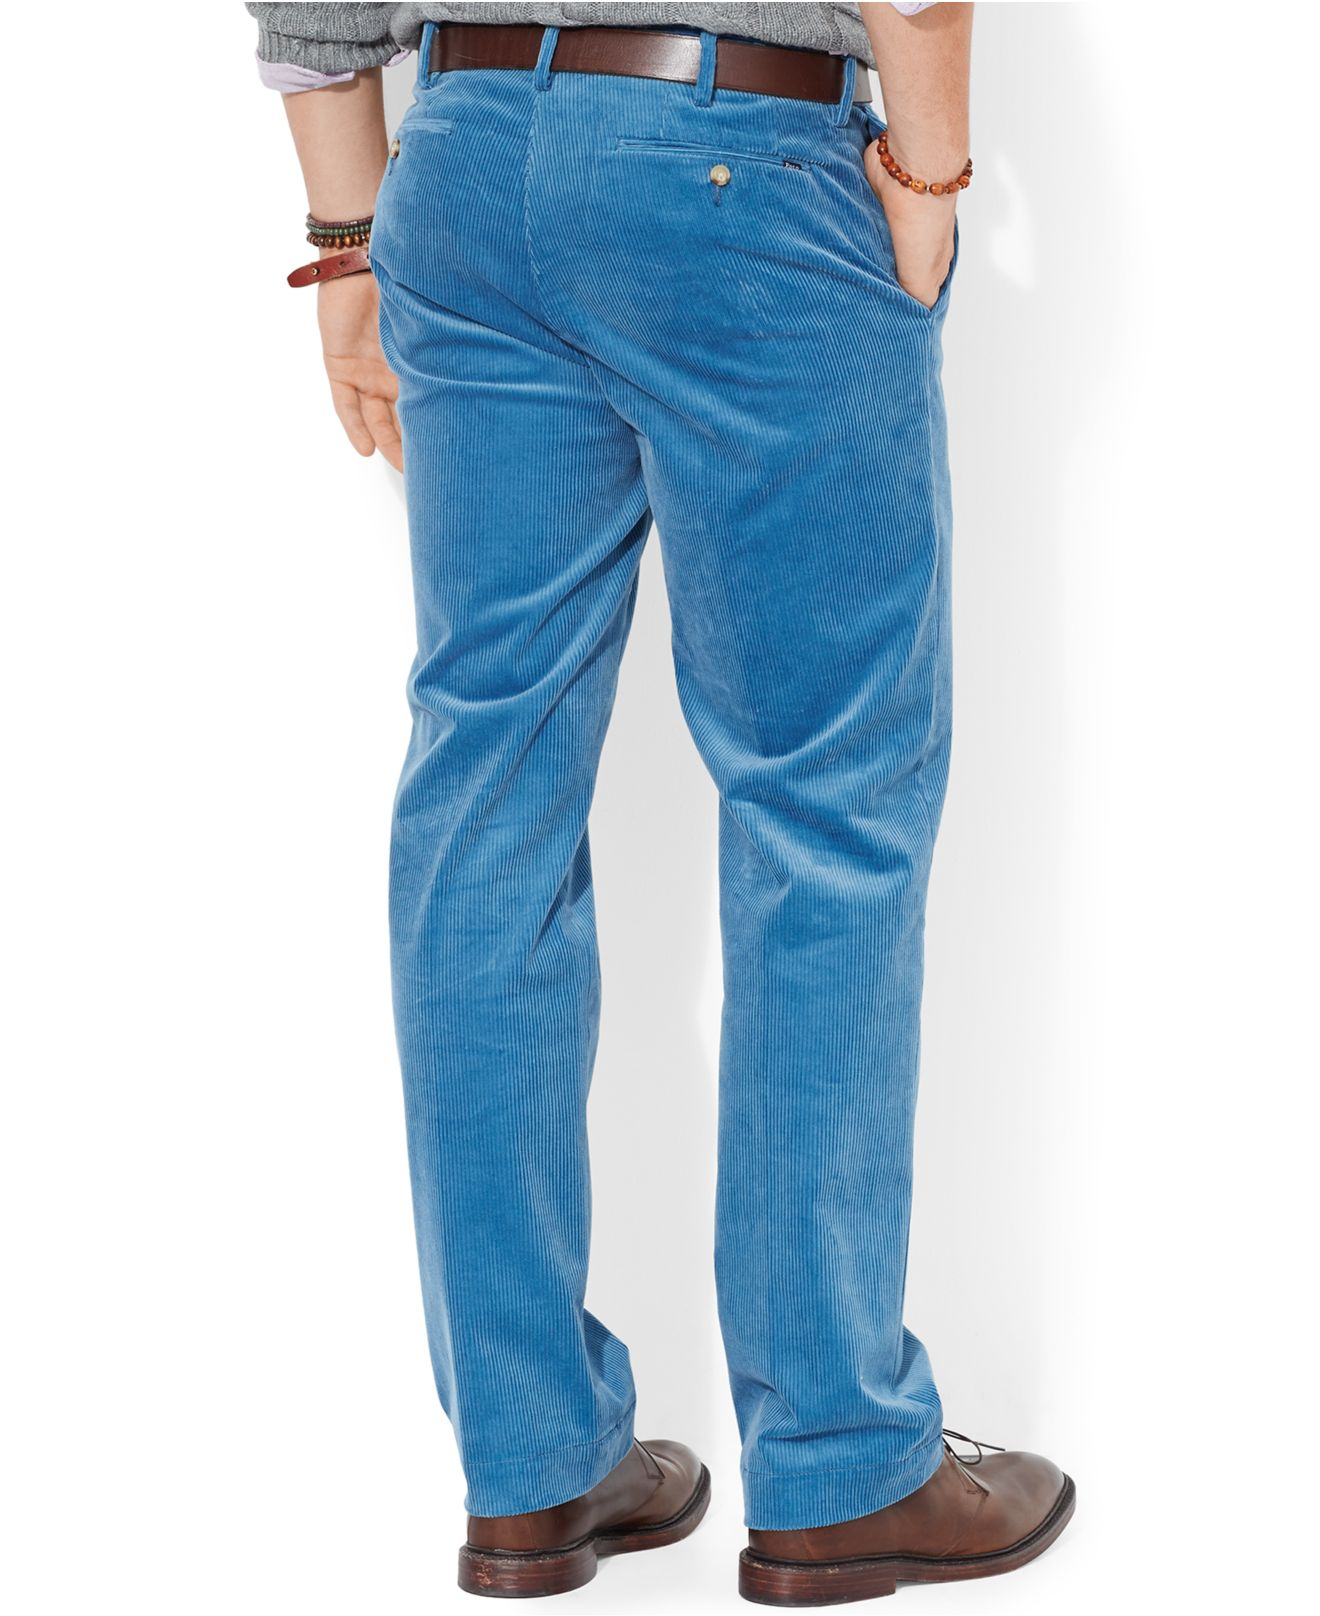 Lyst - Polo Ralph Lauren Classic Fit Newport Corduroy Pants in Blue for Men